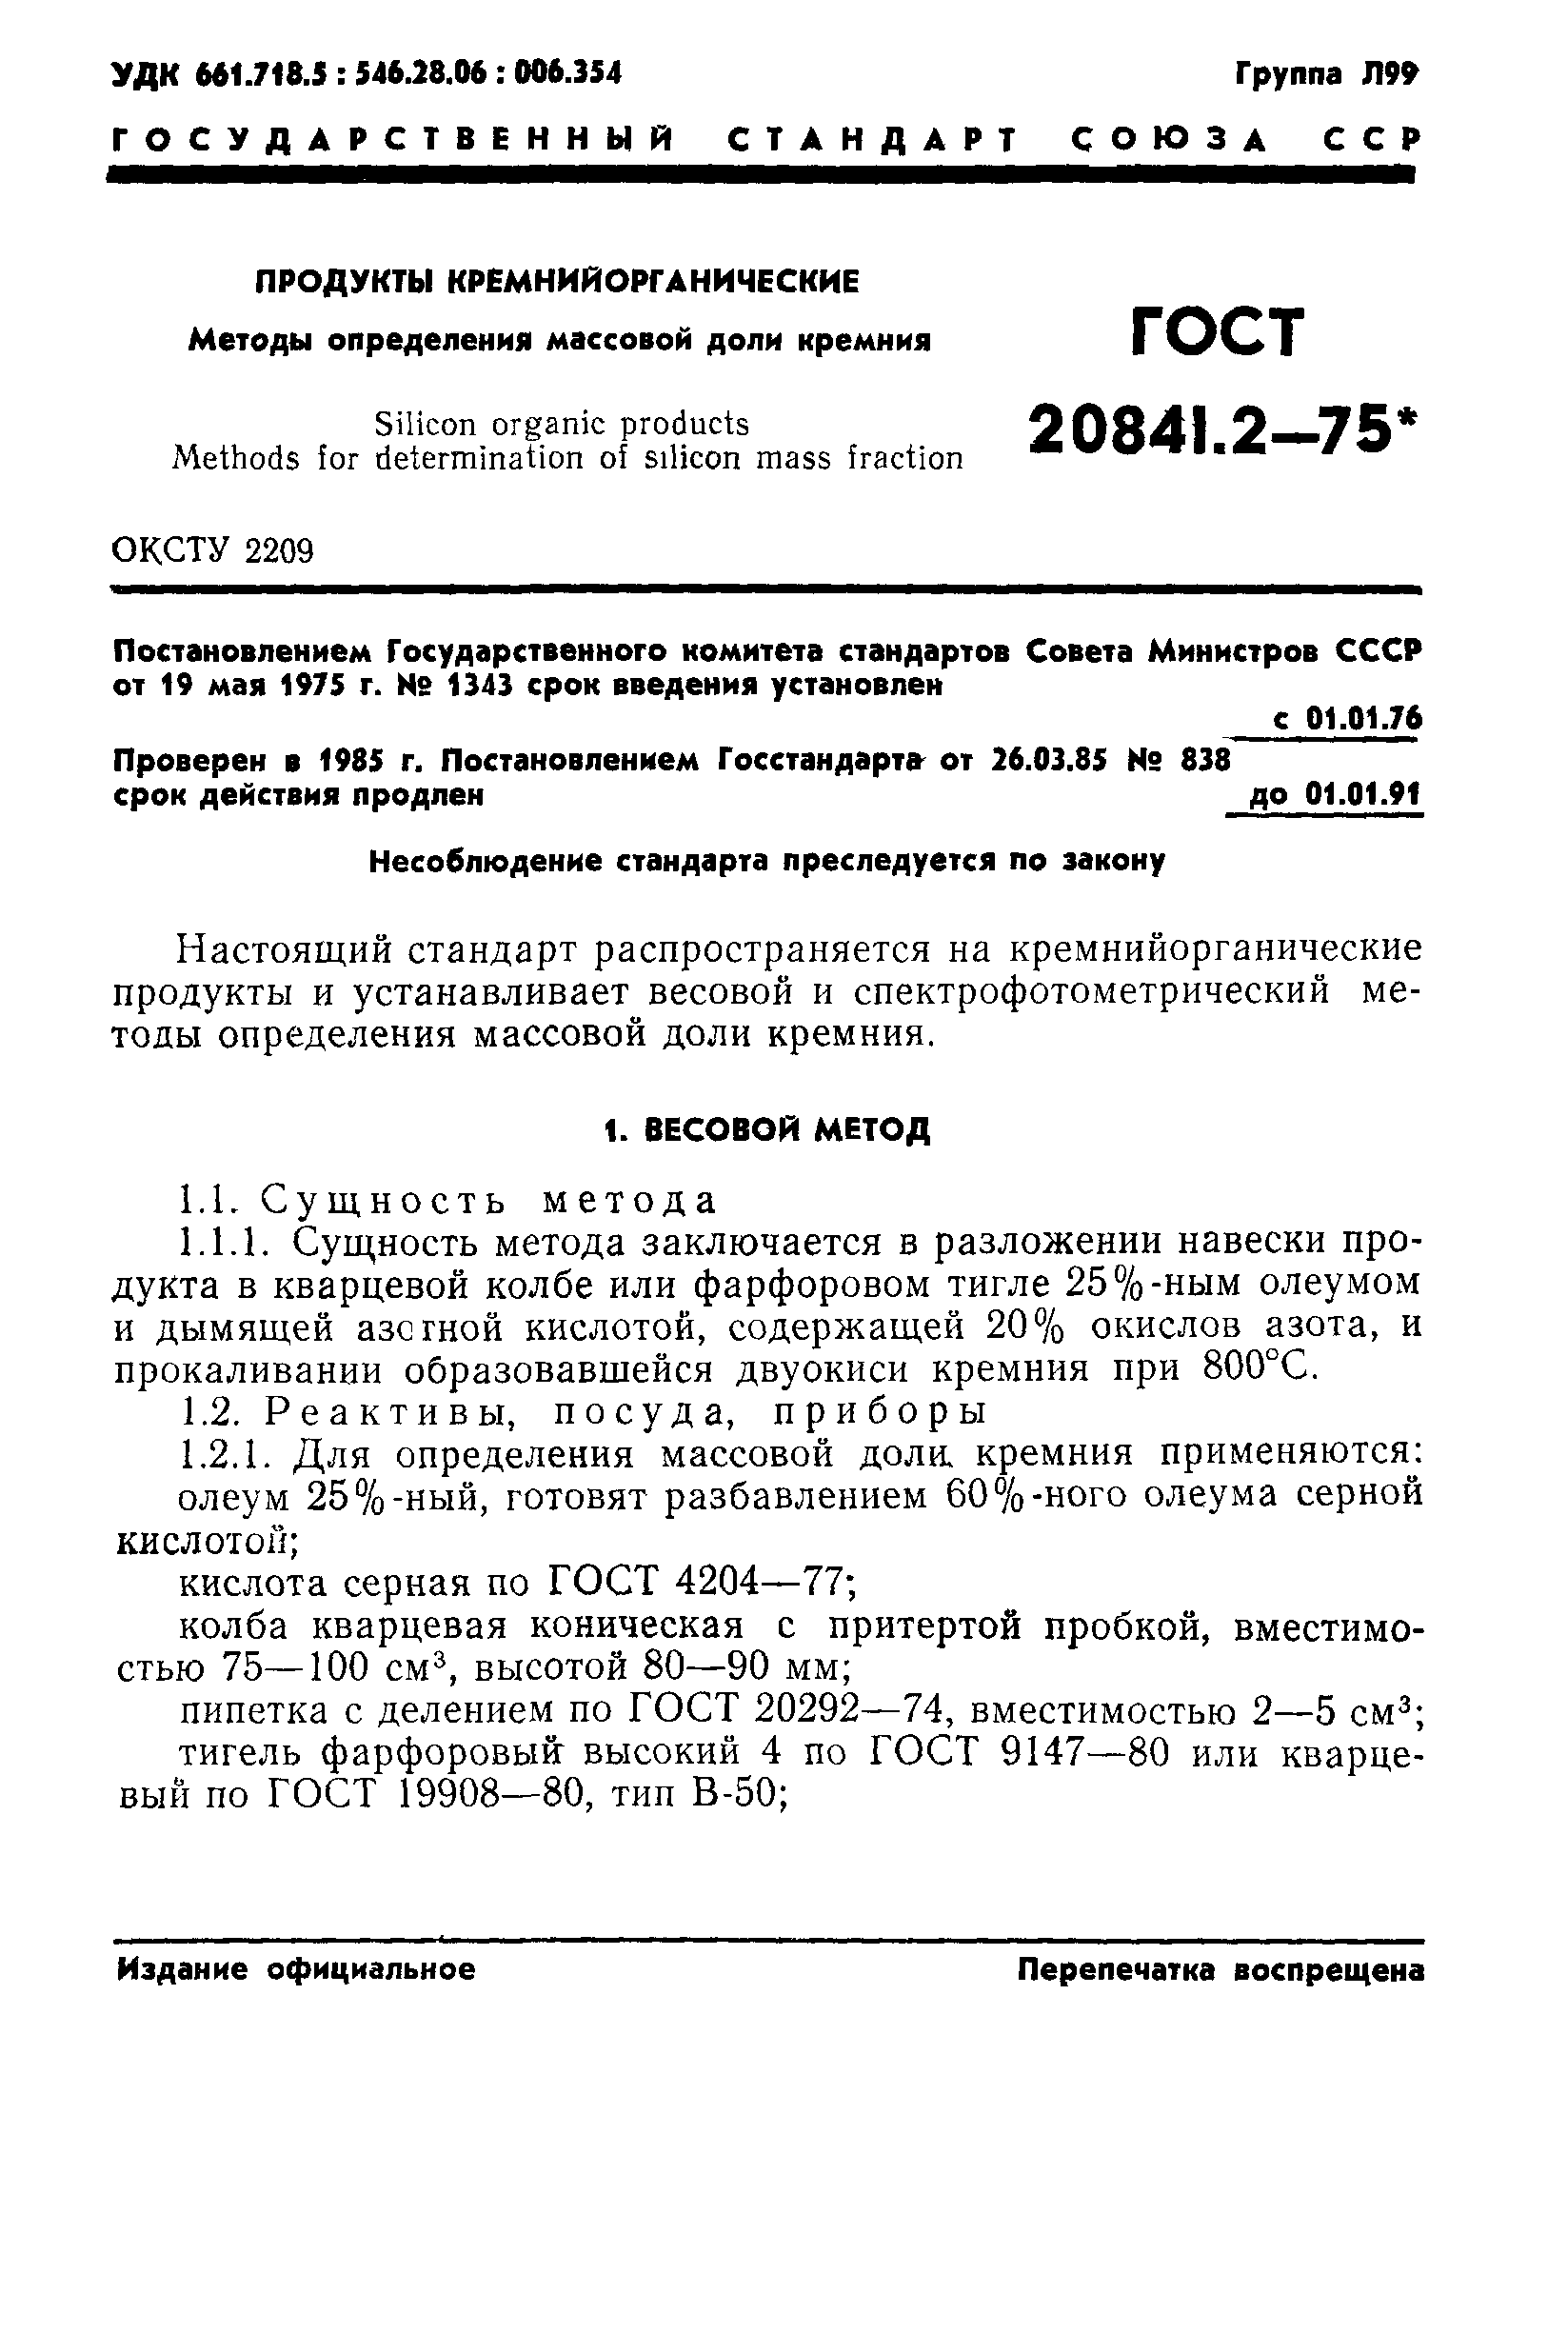 ГОСТ 20841.2-75